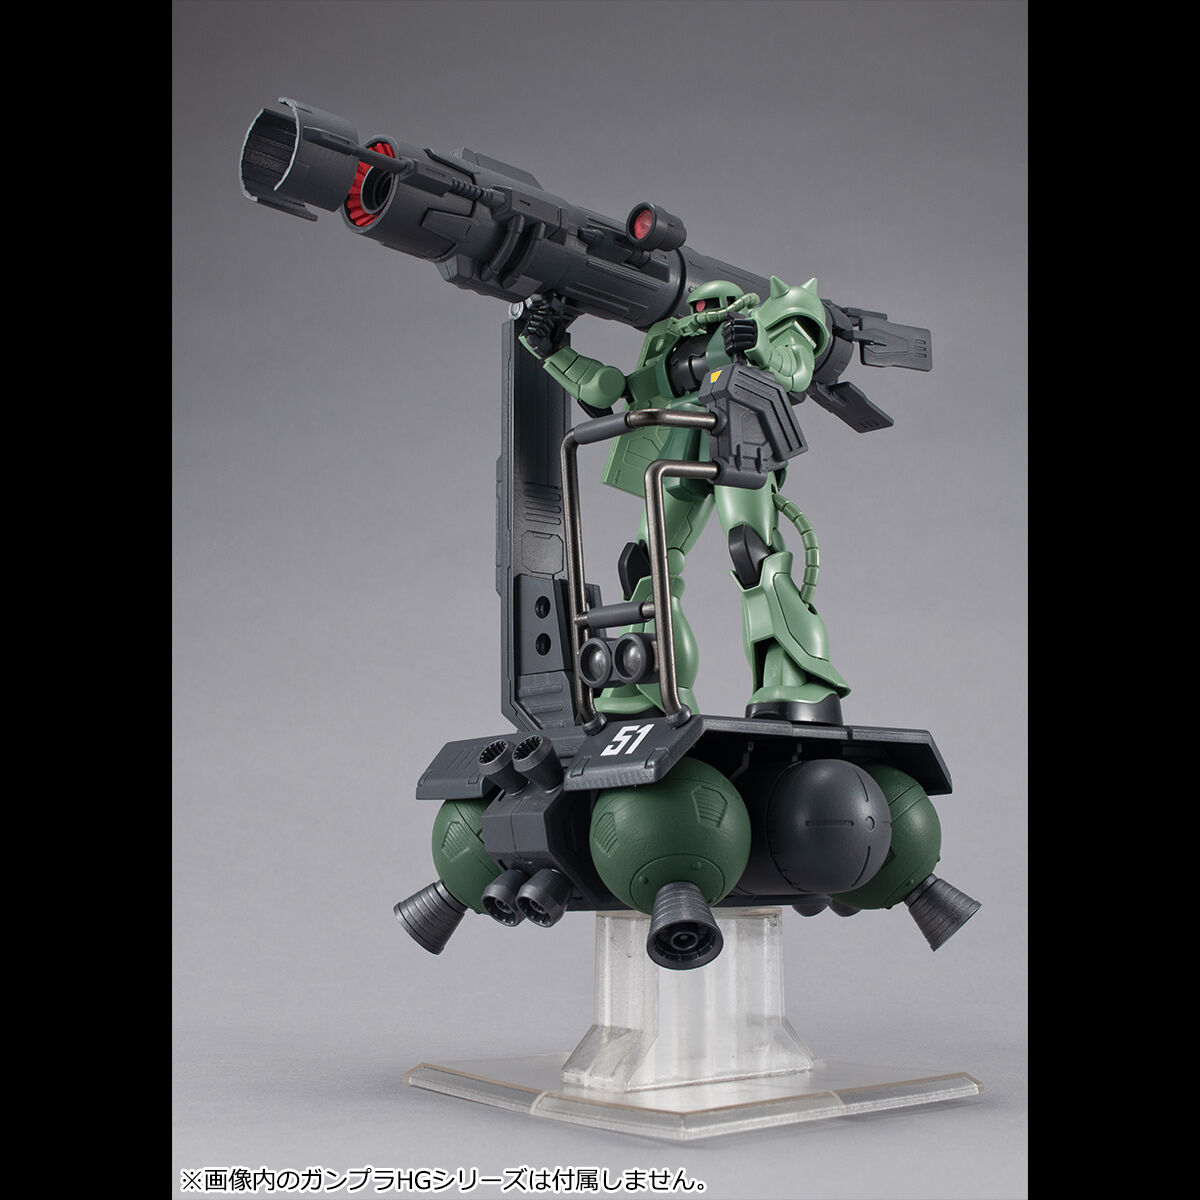 Megahobby Mechine Build 1/144 Skiure for Mobile Suit Gundam series